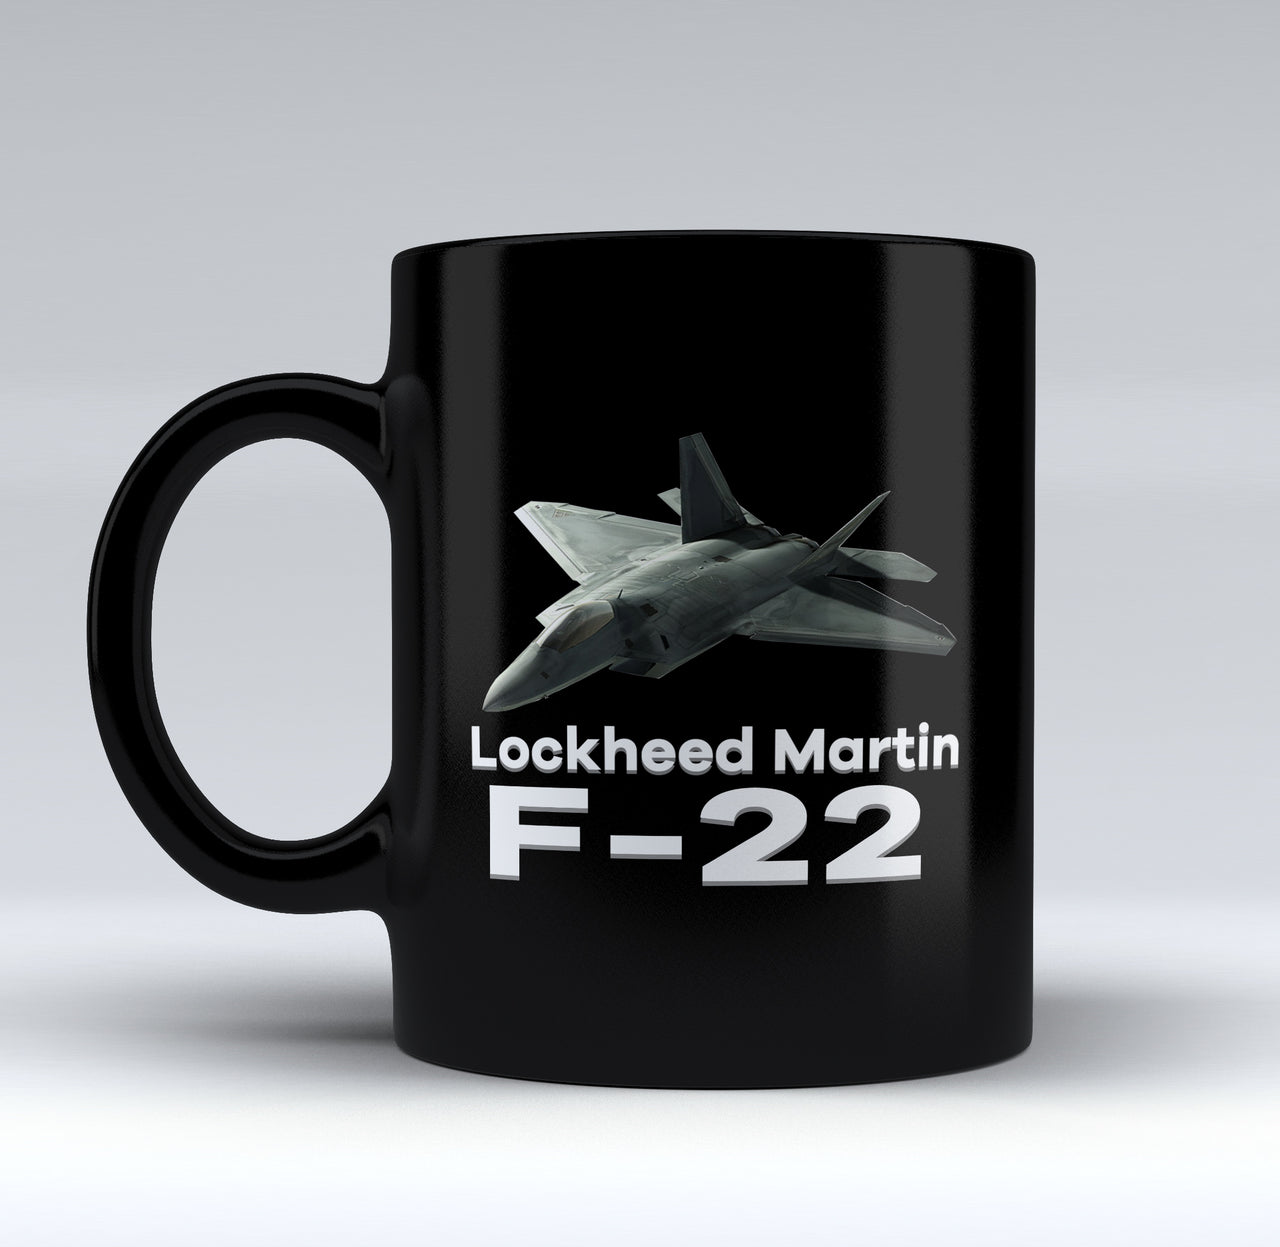 The Lockheed Martin F22 Designed Black Mugs